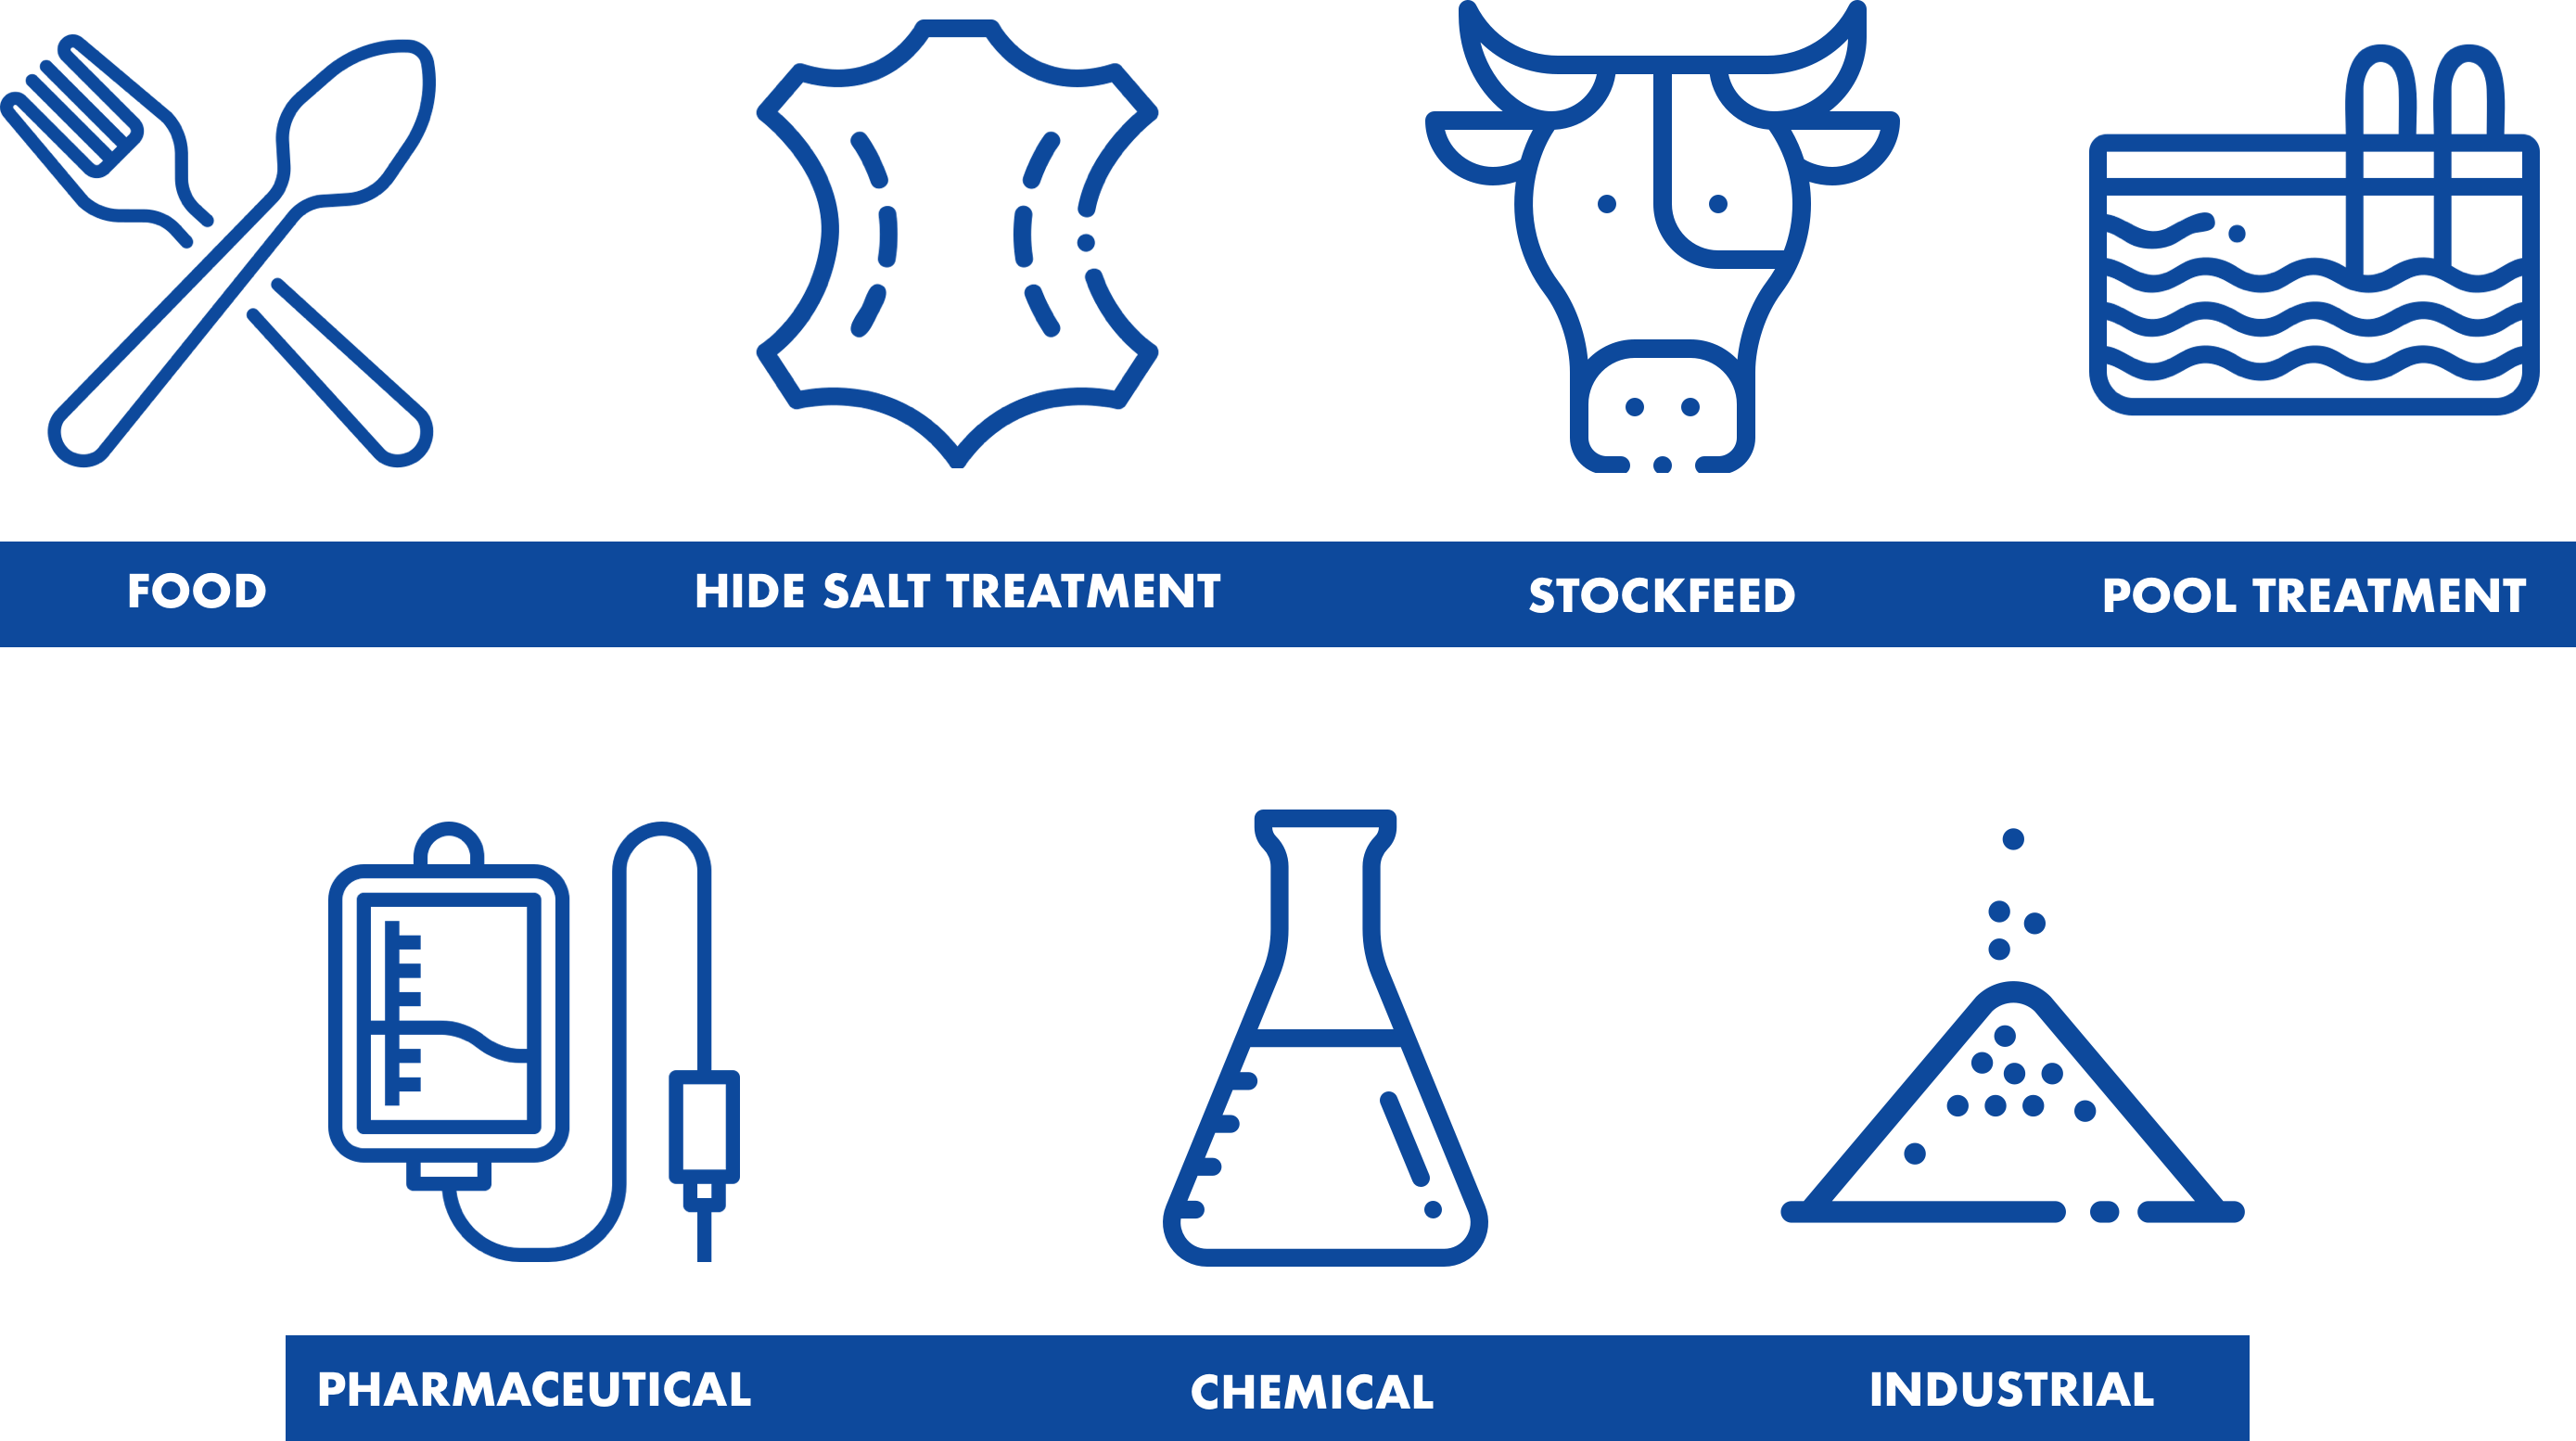 An infographic of different uses for salt including food salt, hide treatment salt, stockfeed salt, pool treatment salt, pharmaceutical salt, chemical salt, and industrial salt